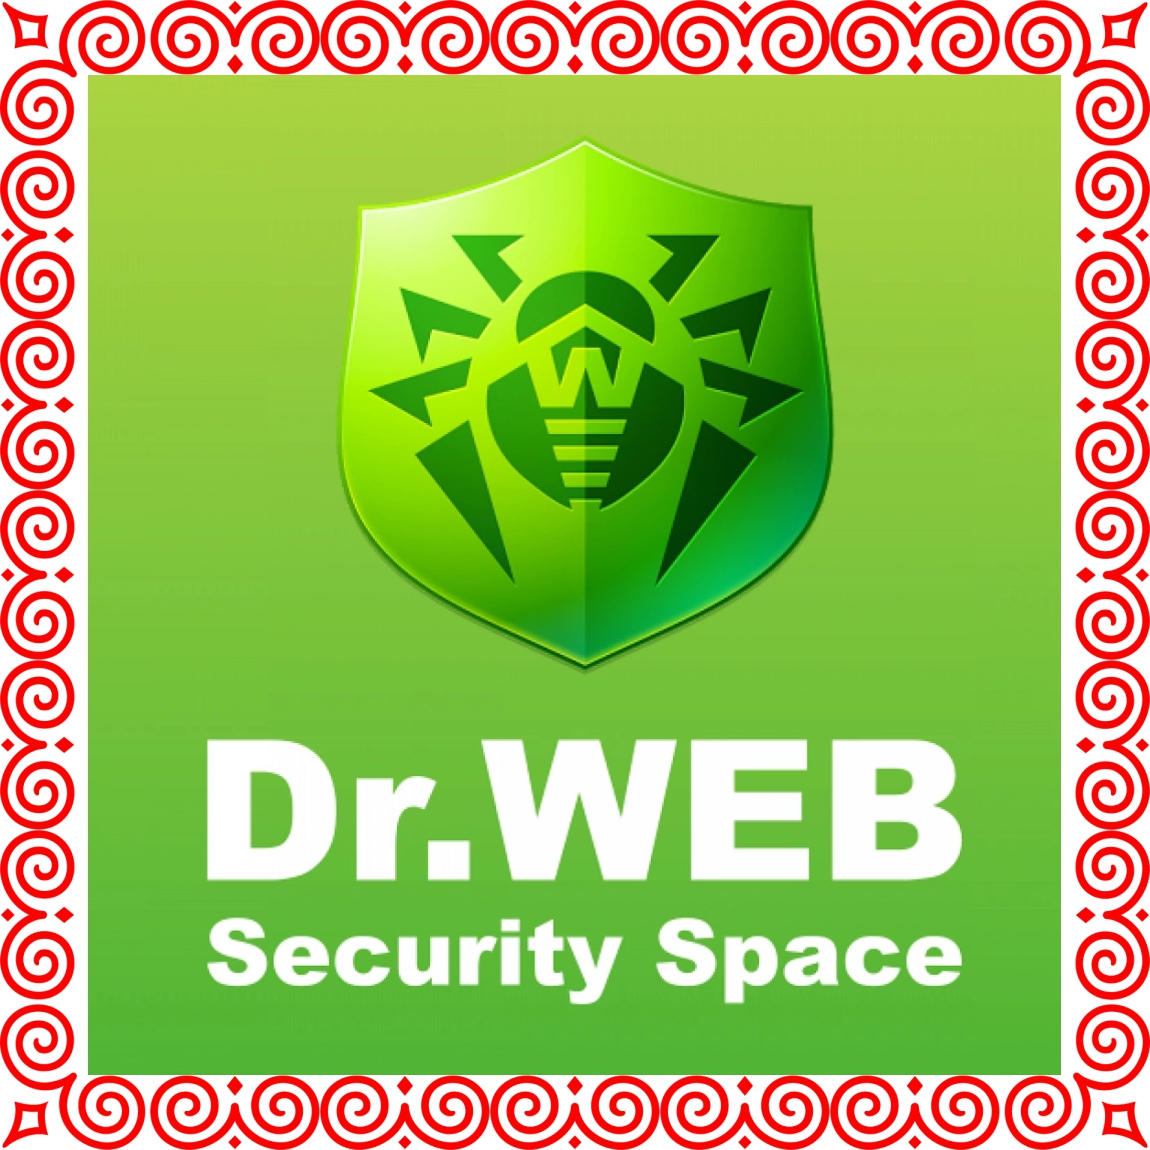 DR.WEB SECURITY SPACE 1 PC 3 MONTHS KEY